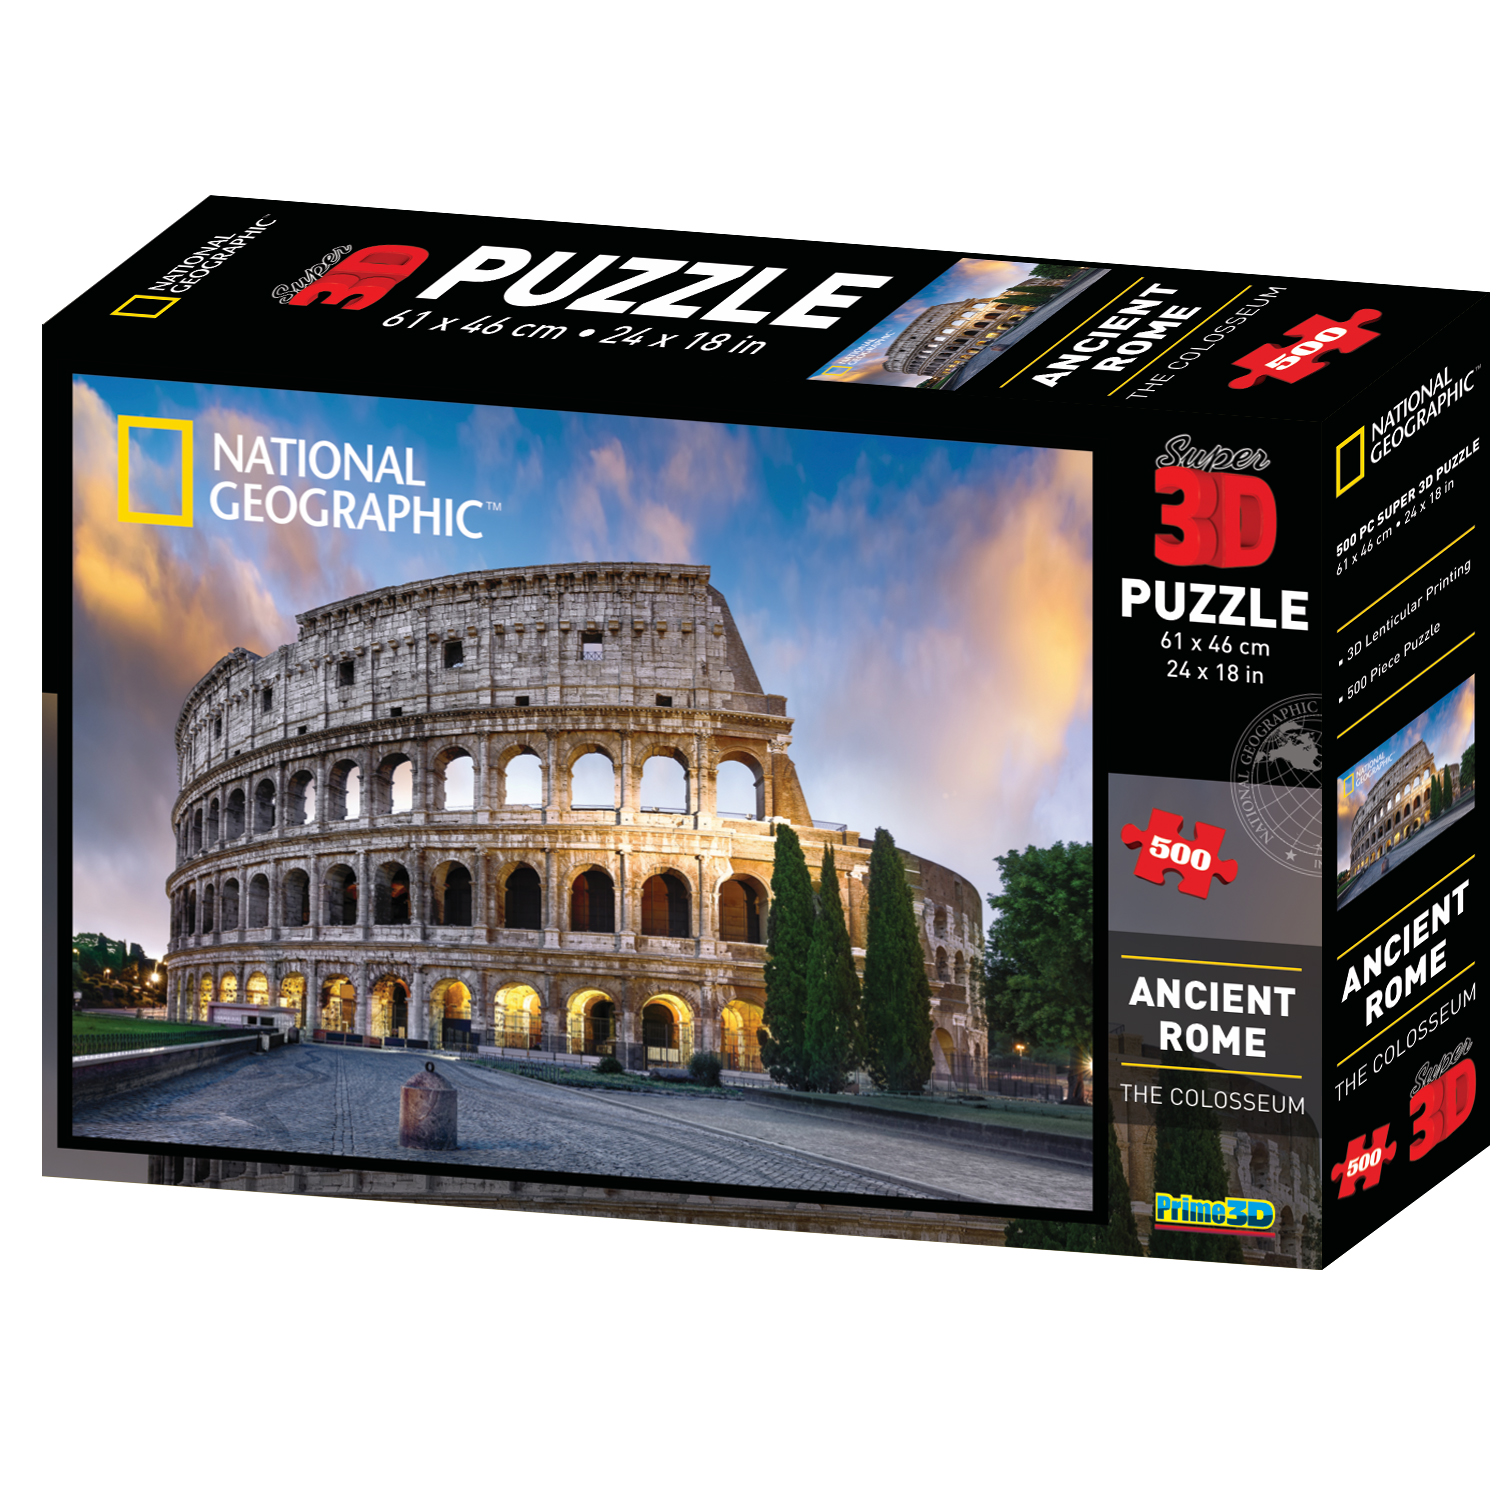 Puzzle 3D National Geographic Rome Ancienne 4d cityscape 